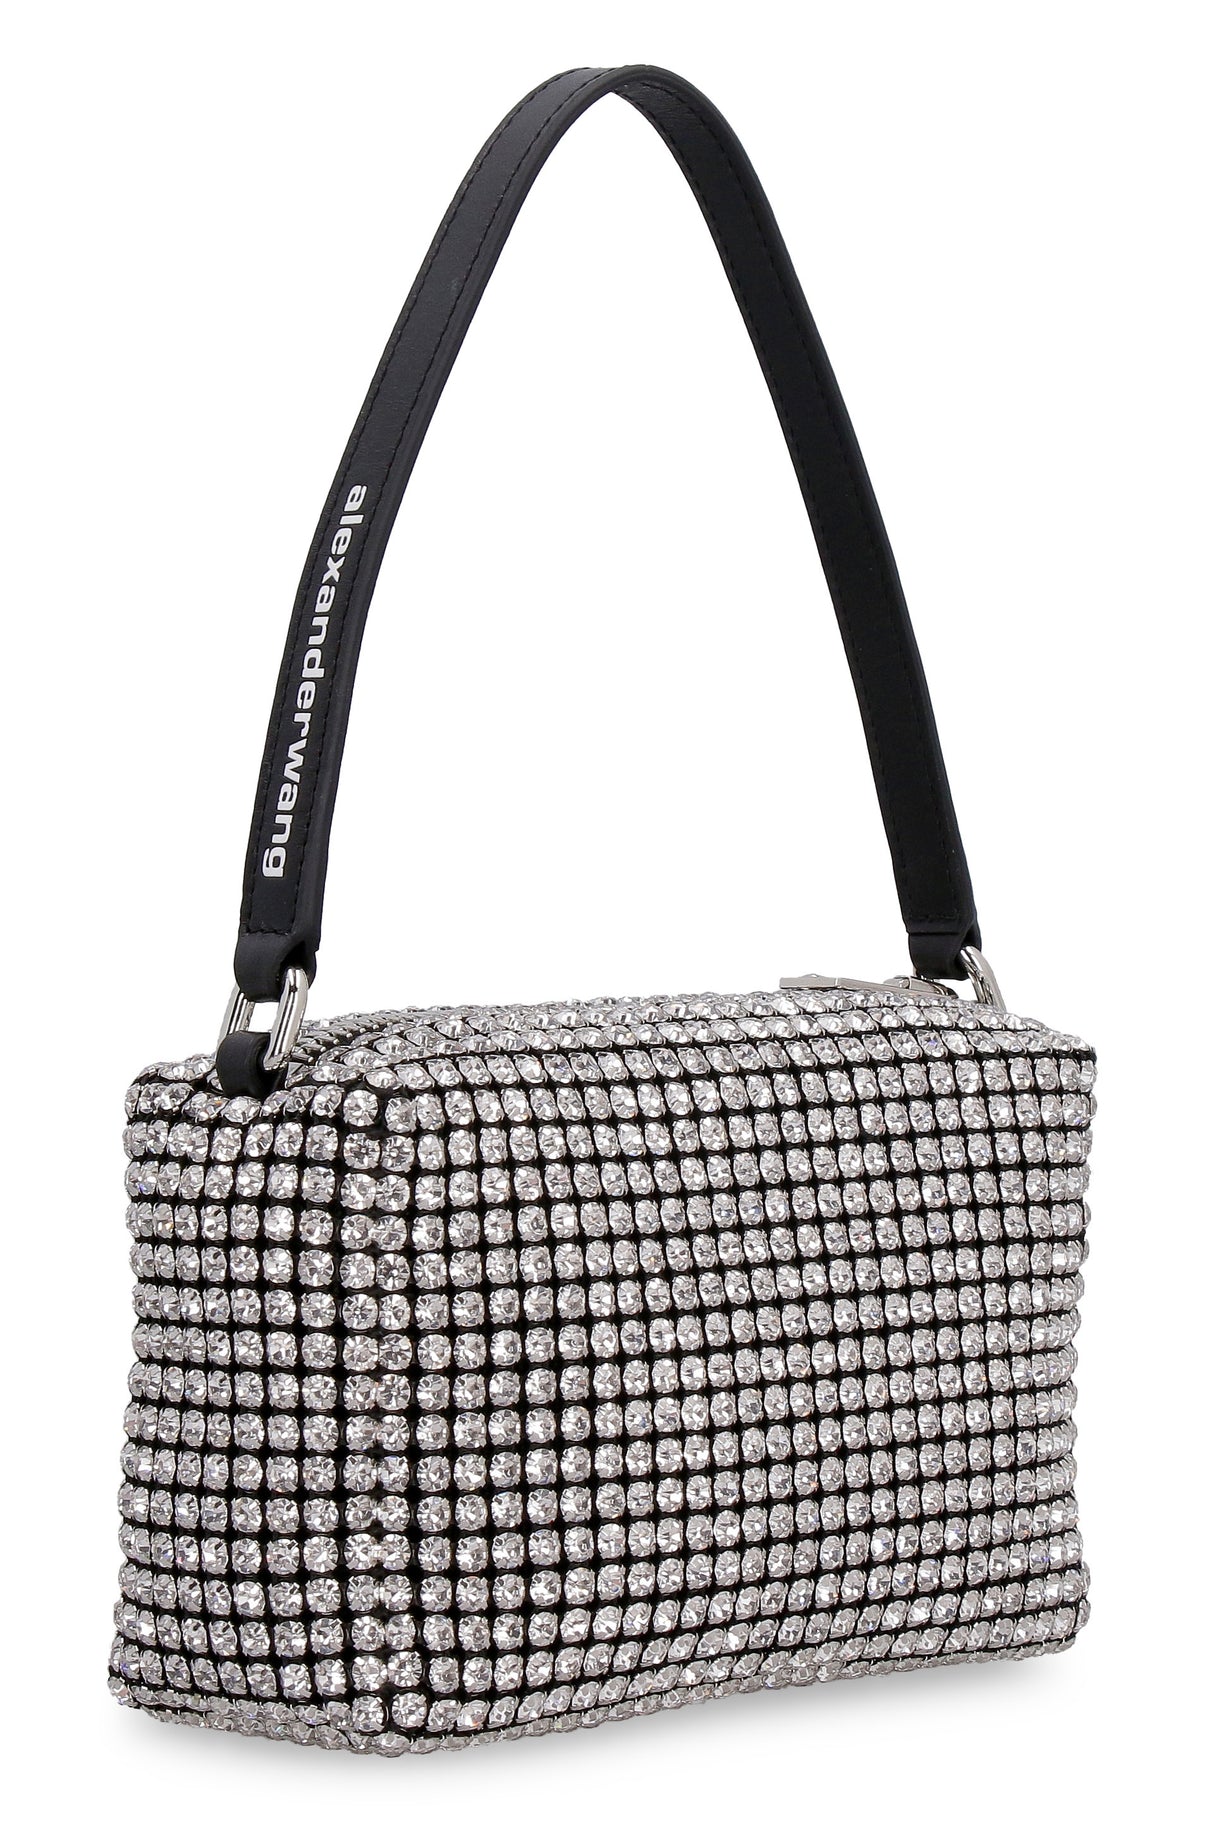 Elegant Chain Mesh and Crystal Handbag with Leather Top Handle